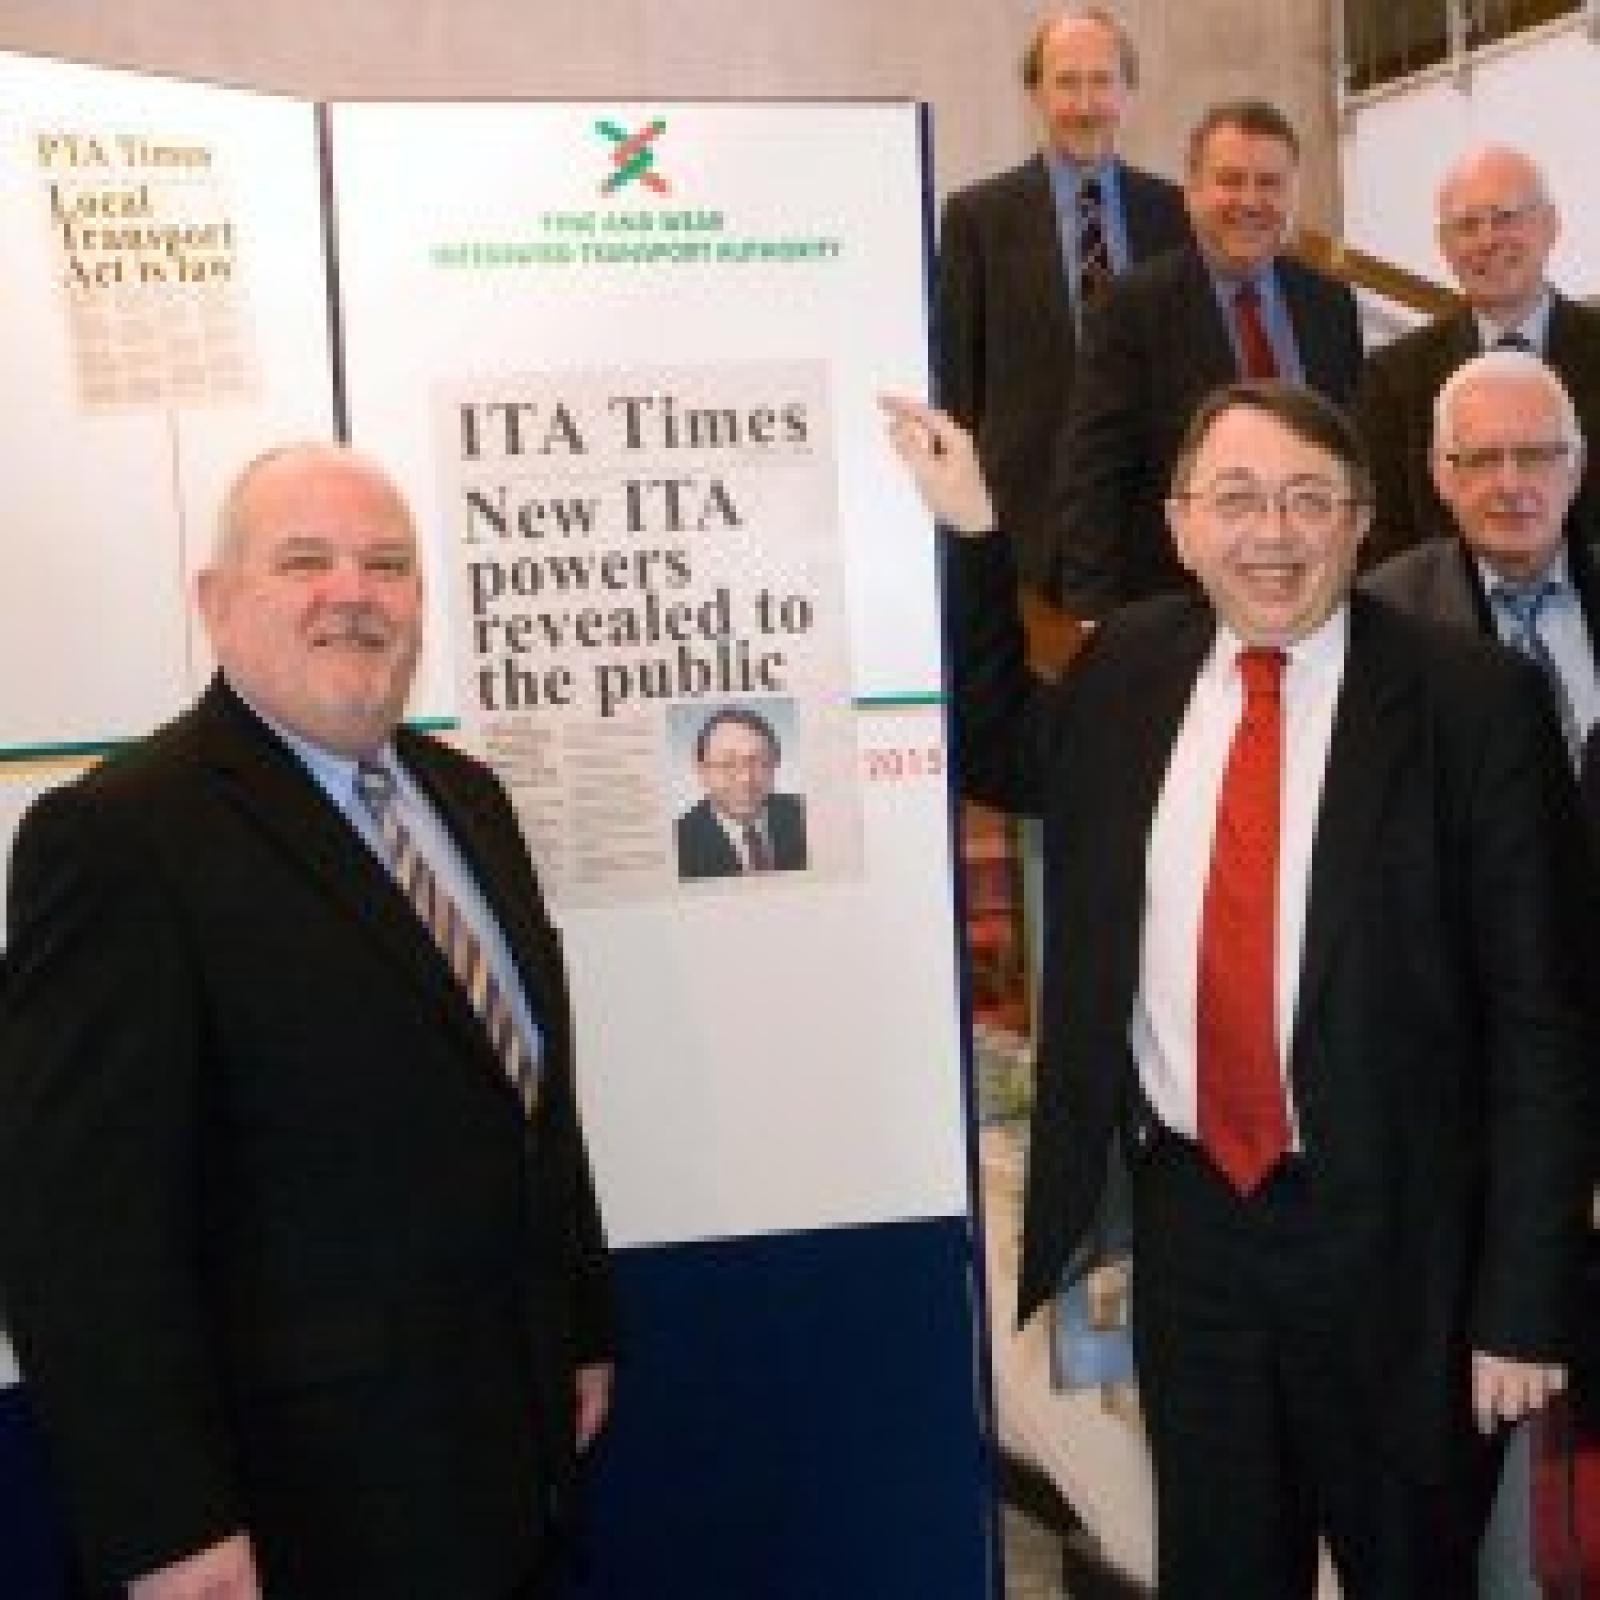 Paul Clark MP visits Newcastle to mark ITA name change